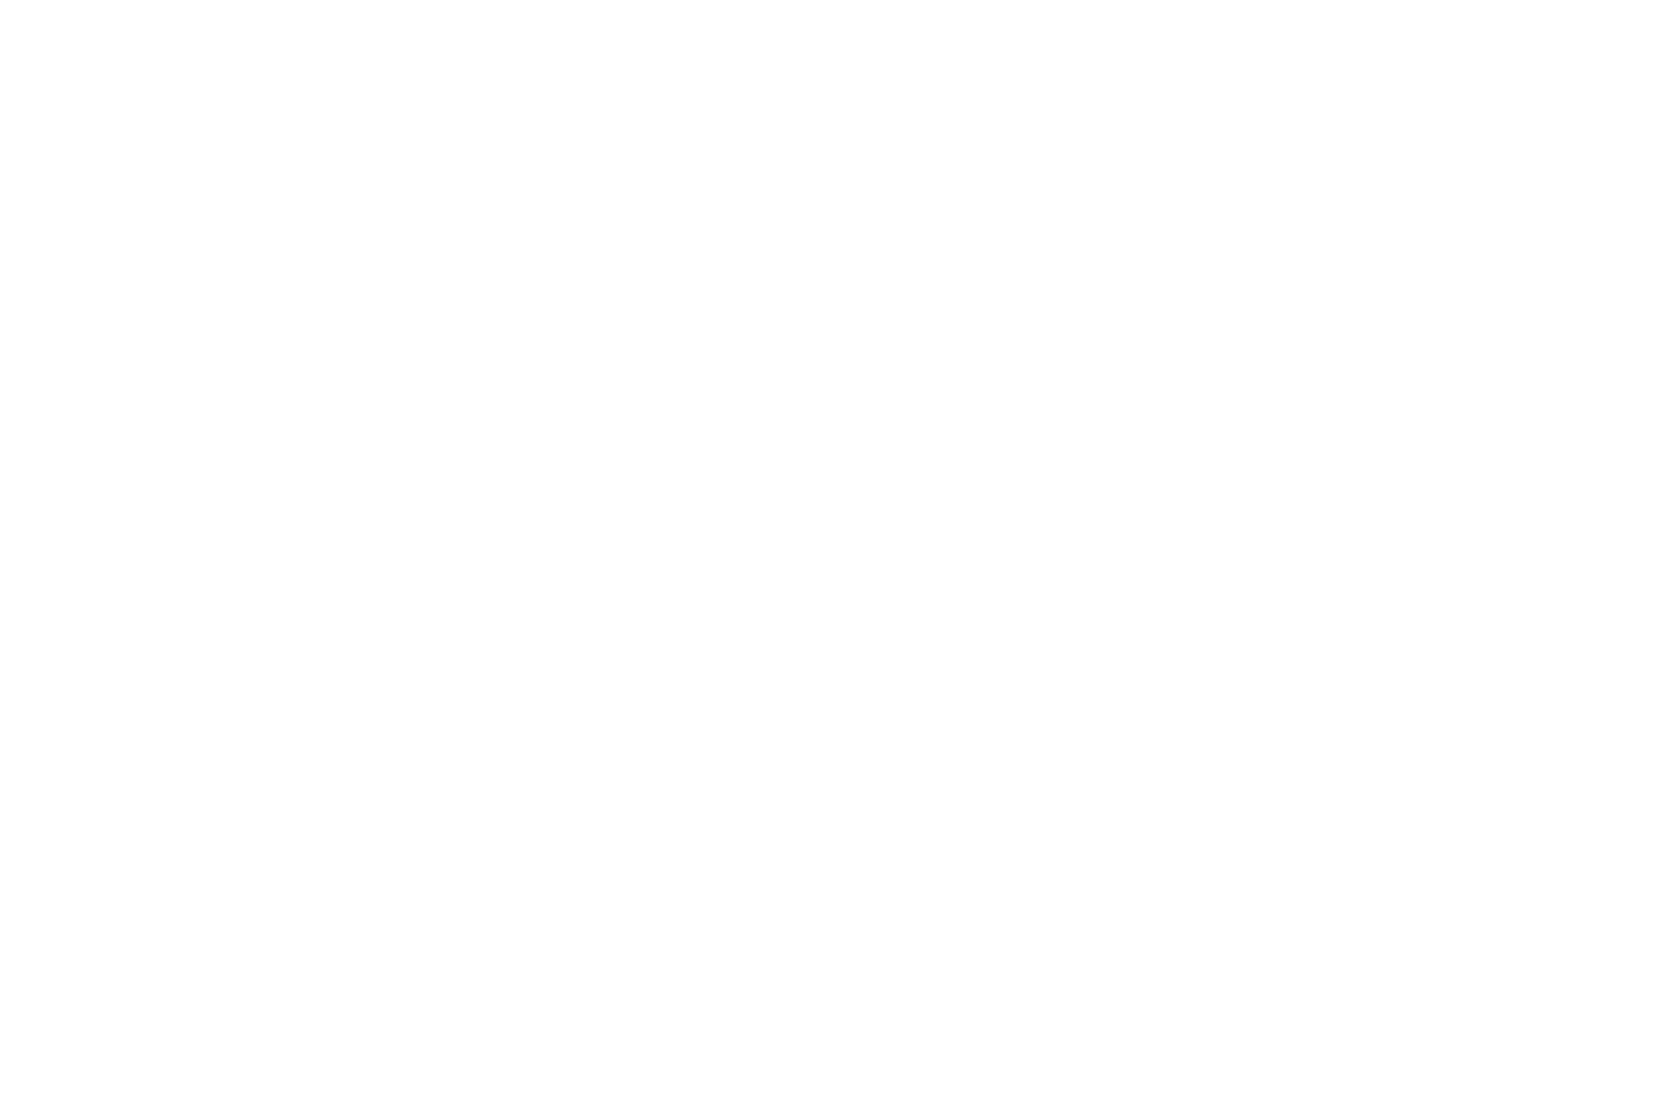 Envelope example - Victoria script in use